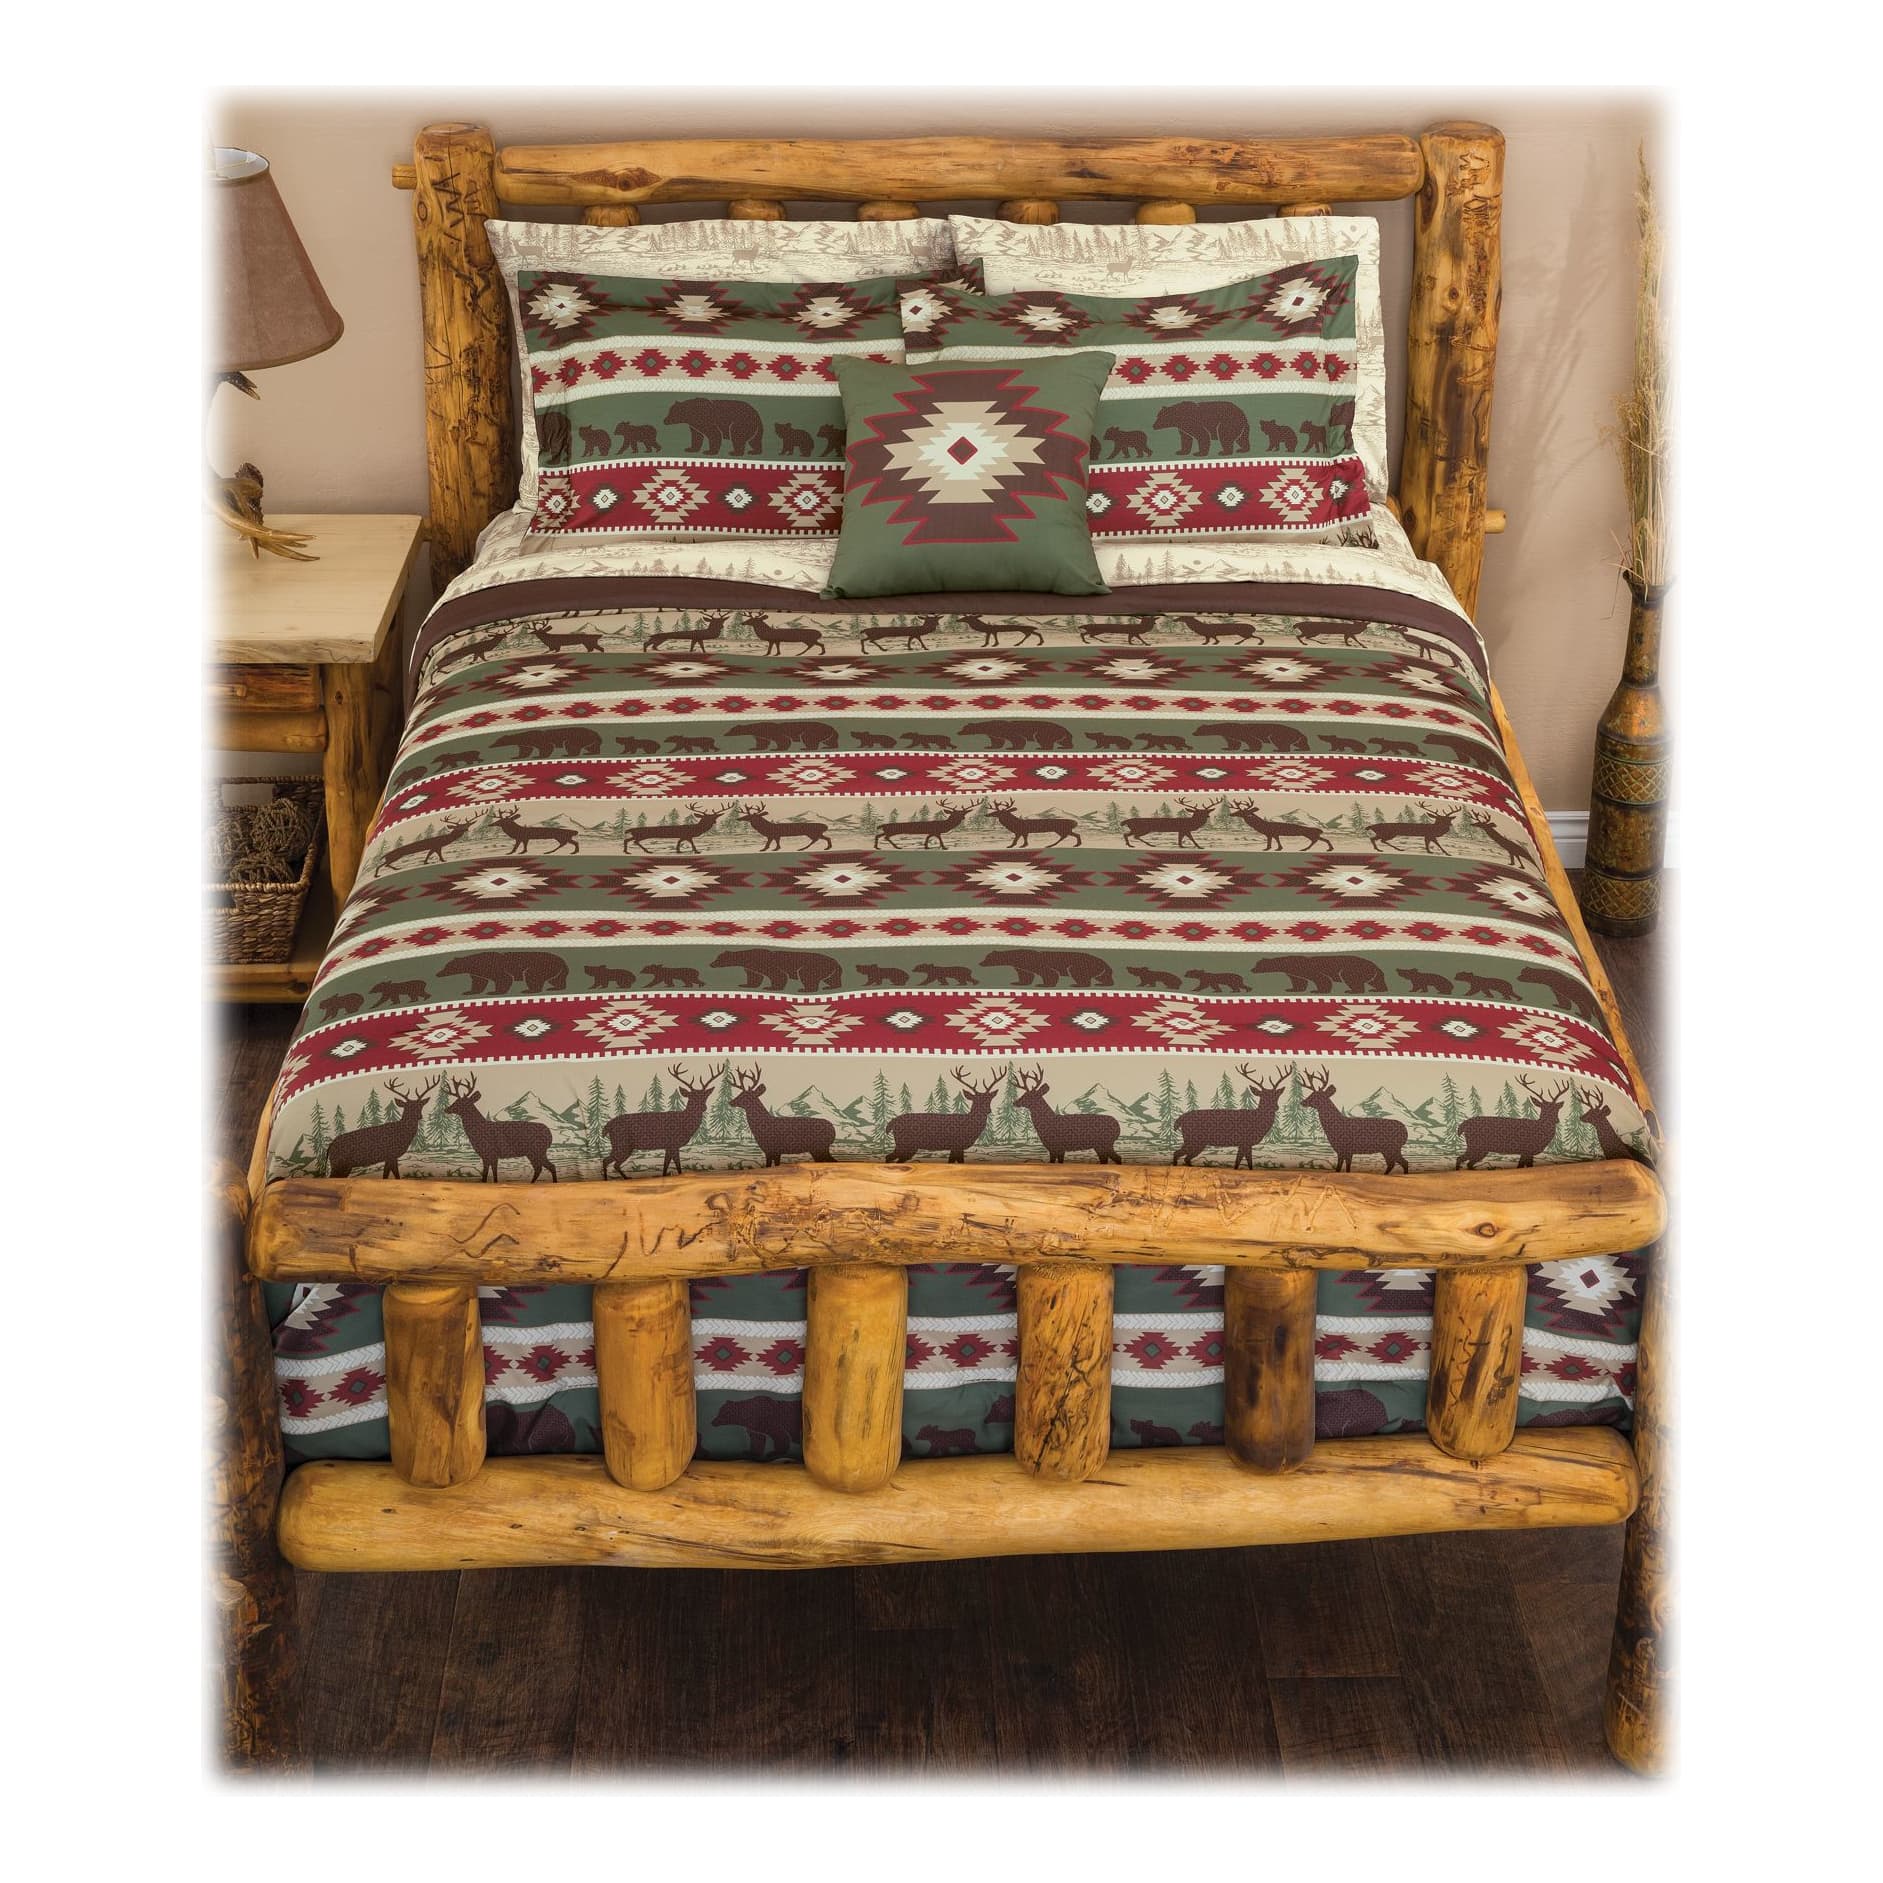 White River™ Home Deer Valley Stripe Bedding Collection Comforter Set